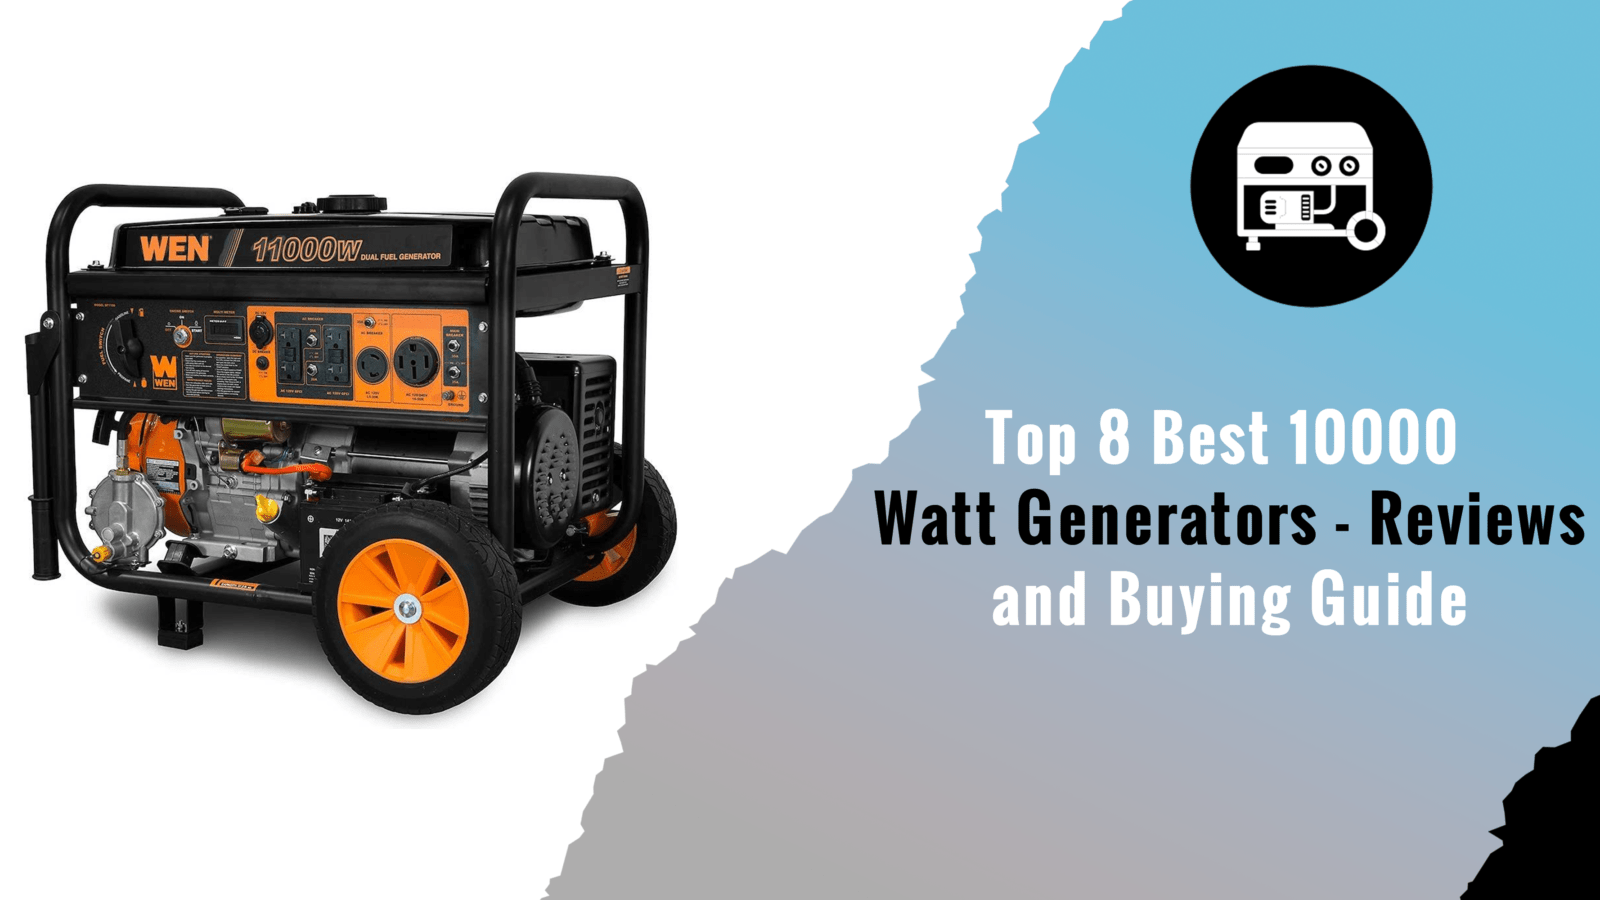 Top 8 Best 10000 Watt Generators - Reviews and Buying Guide